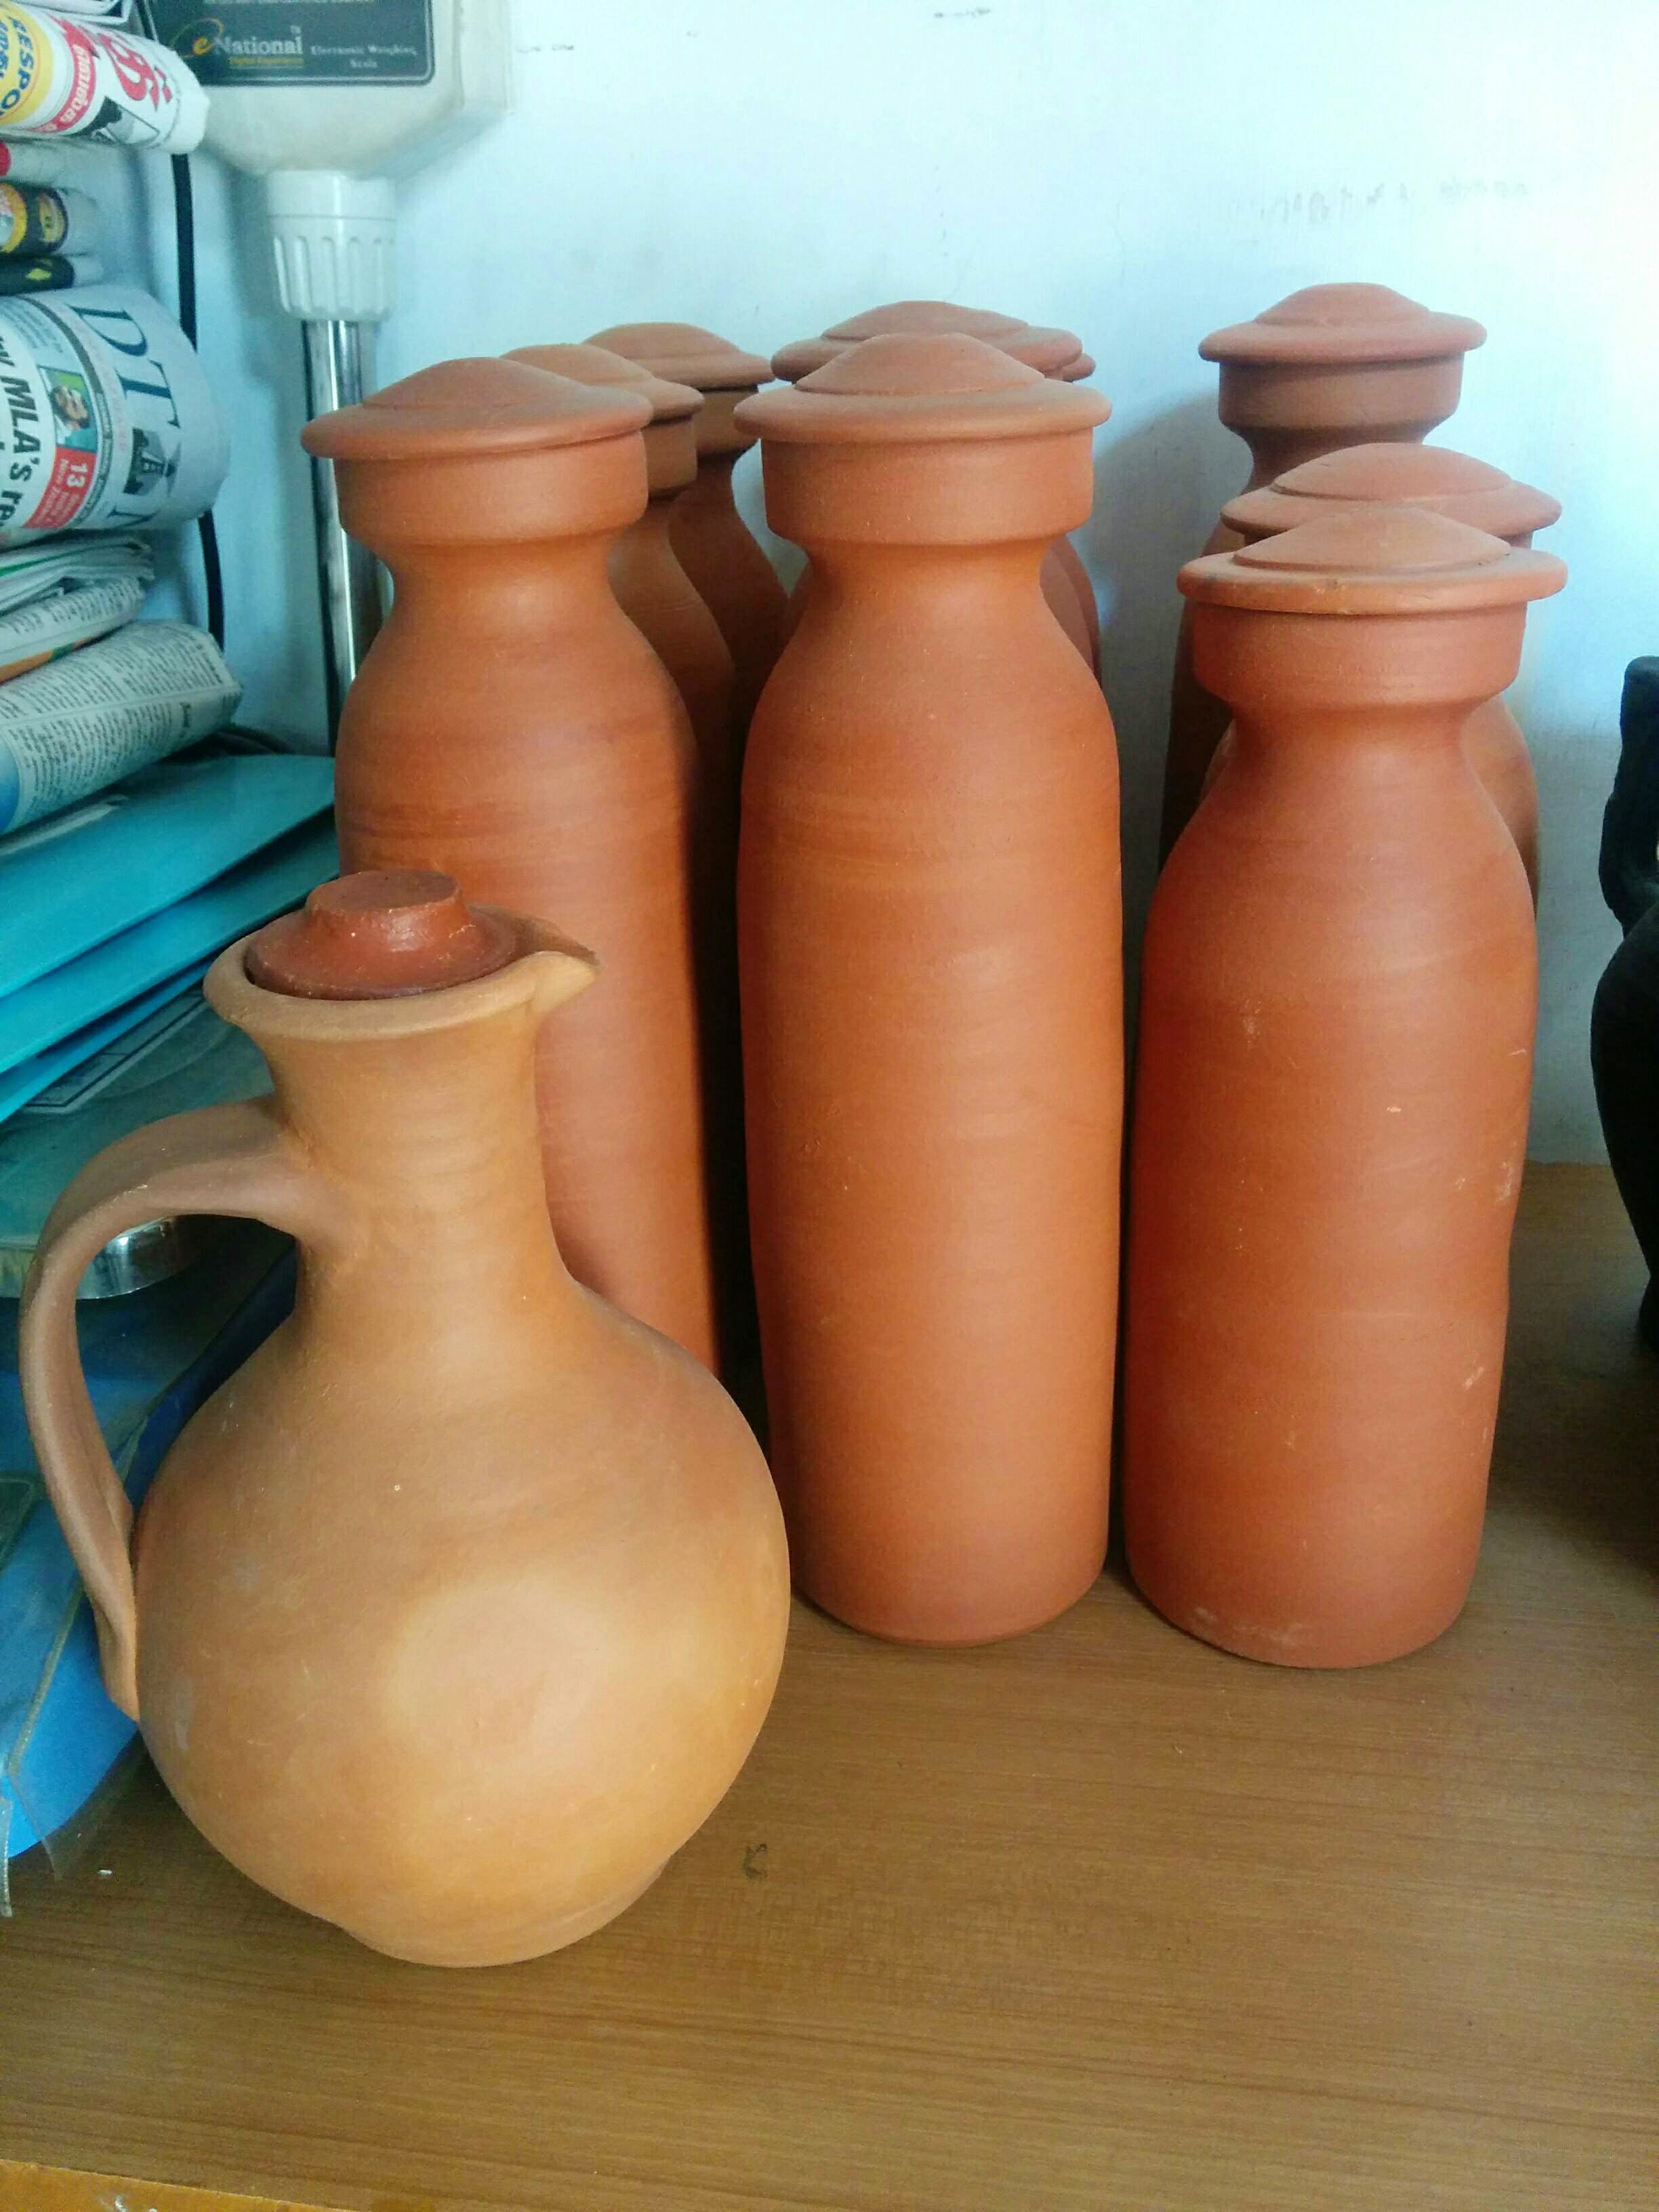 earthenware,Pottery,Vase,Ceramic,Jug,Clay,Artifact,Serveware,Still life,Tableware